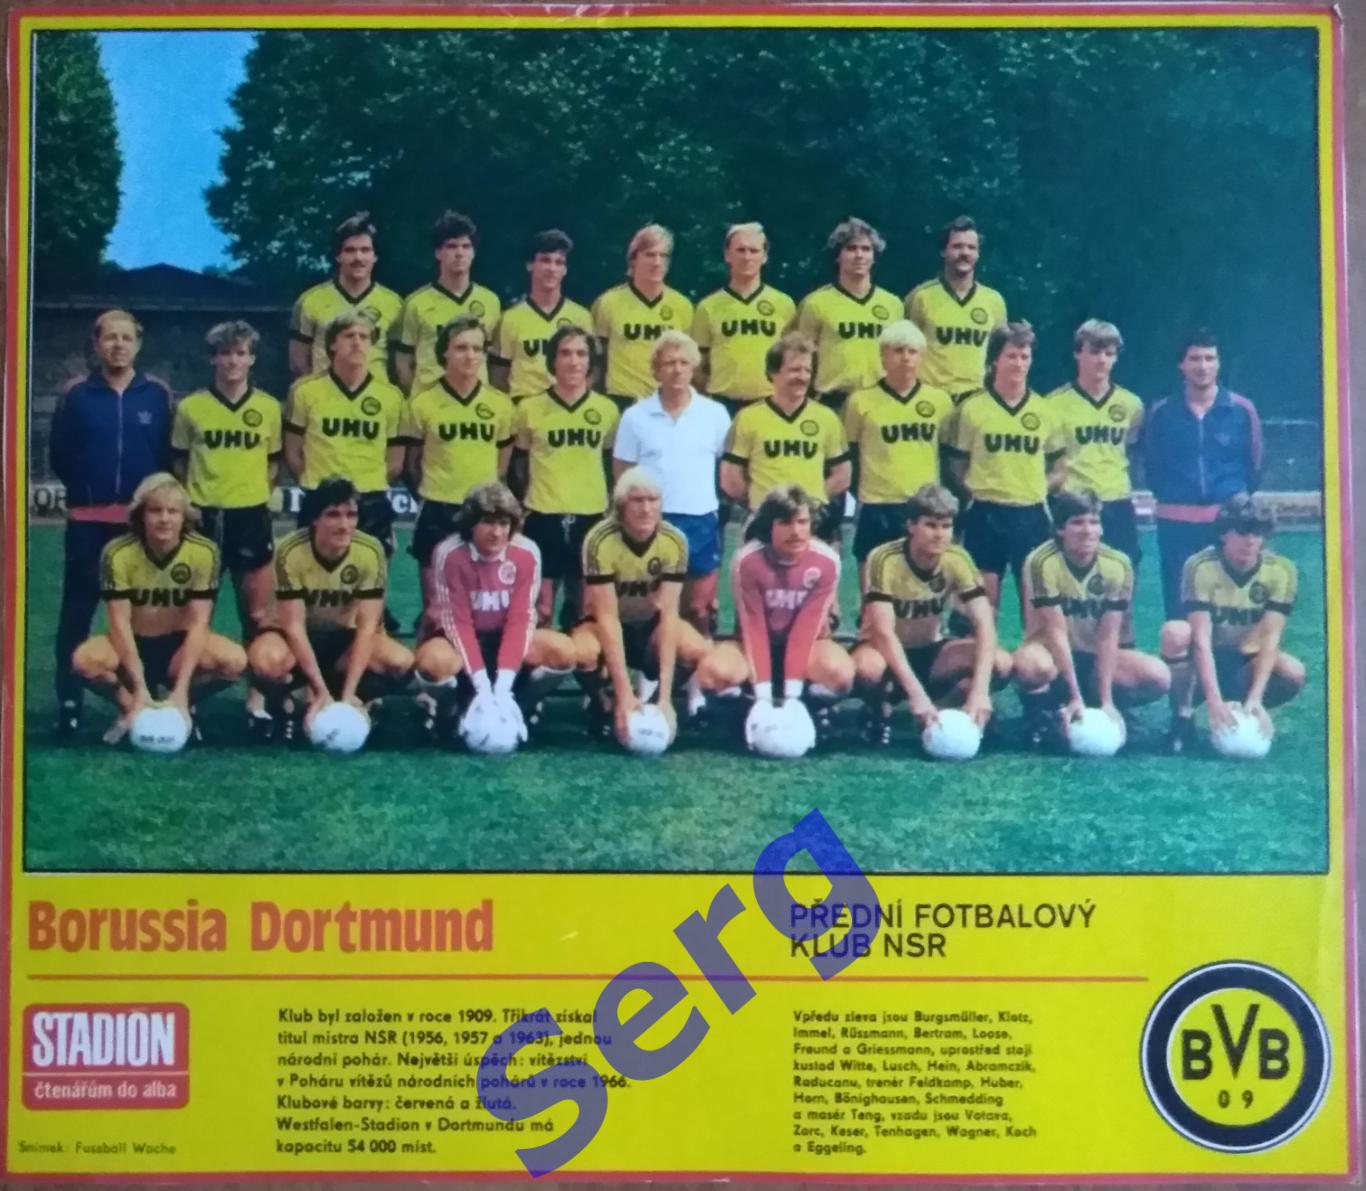 Постер Боруссия Дортмунд, ФРГ из журнала Стадион (Stadion)